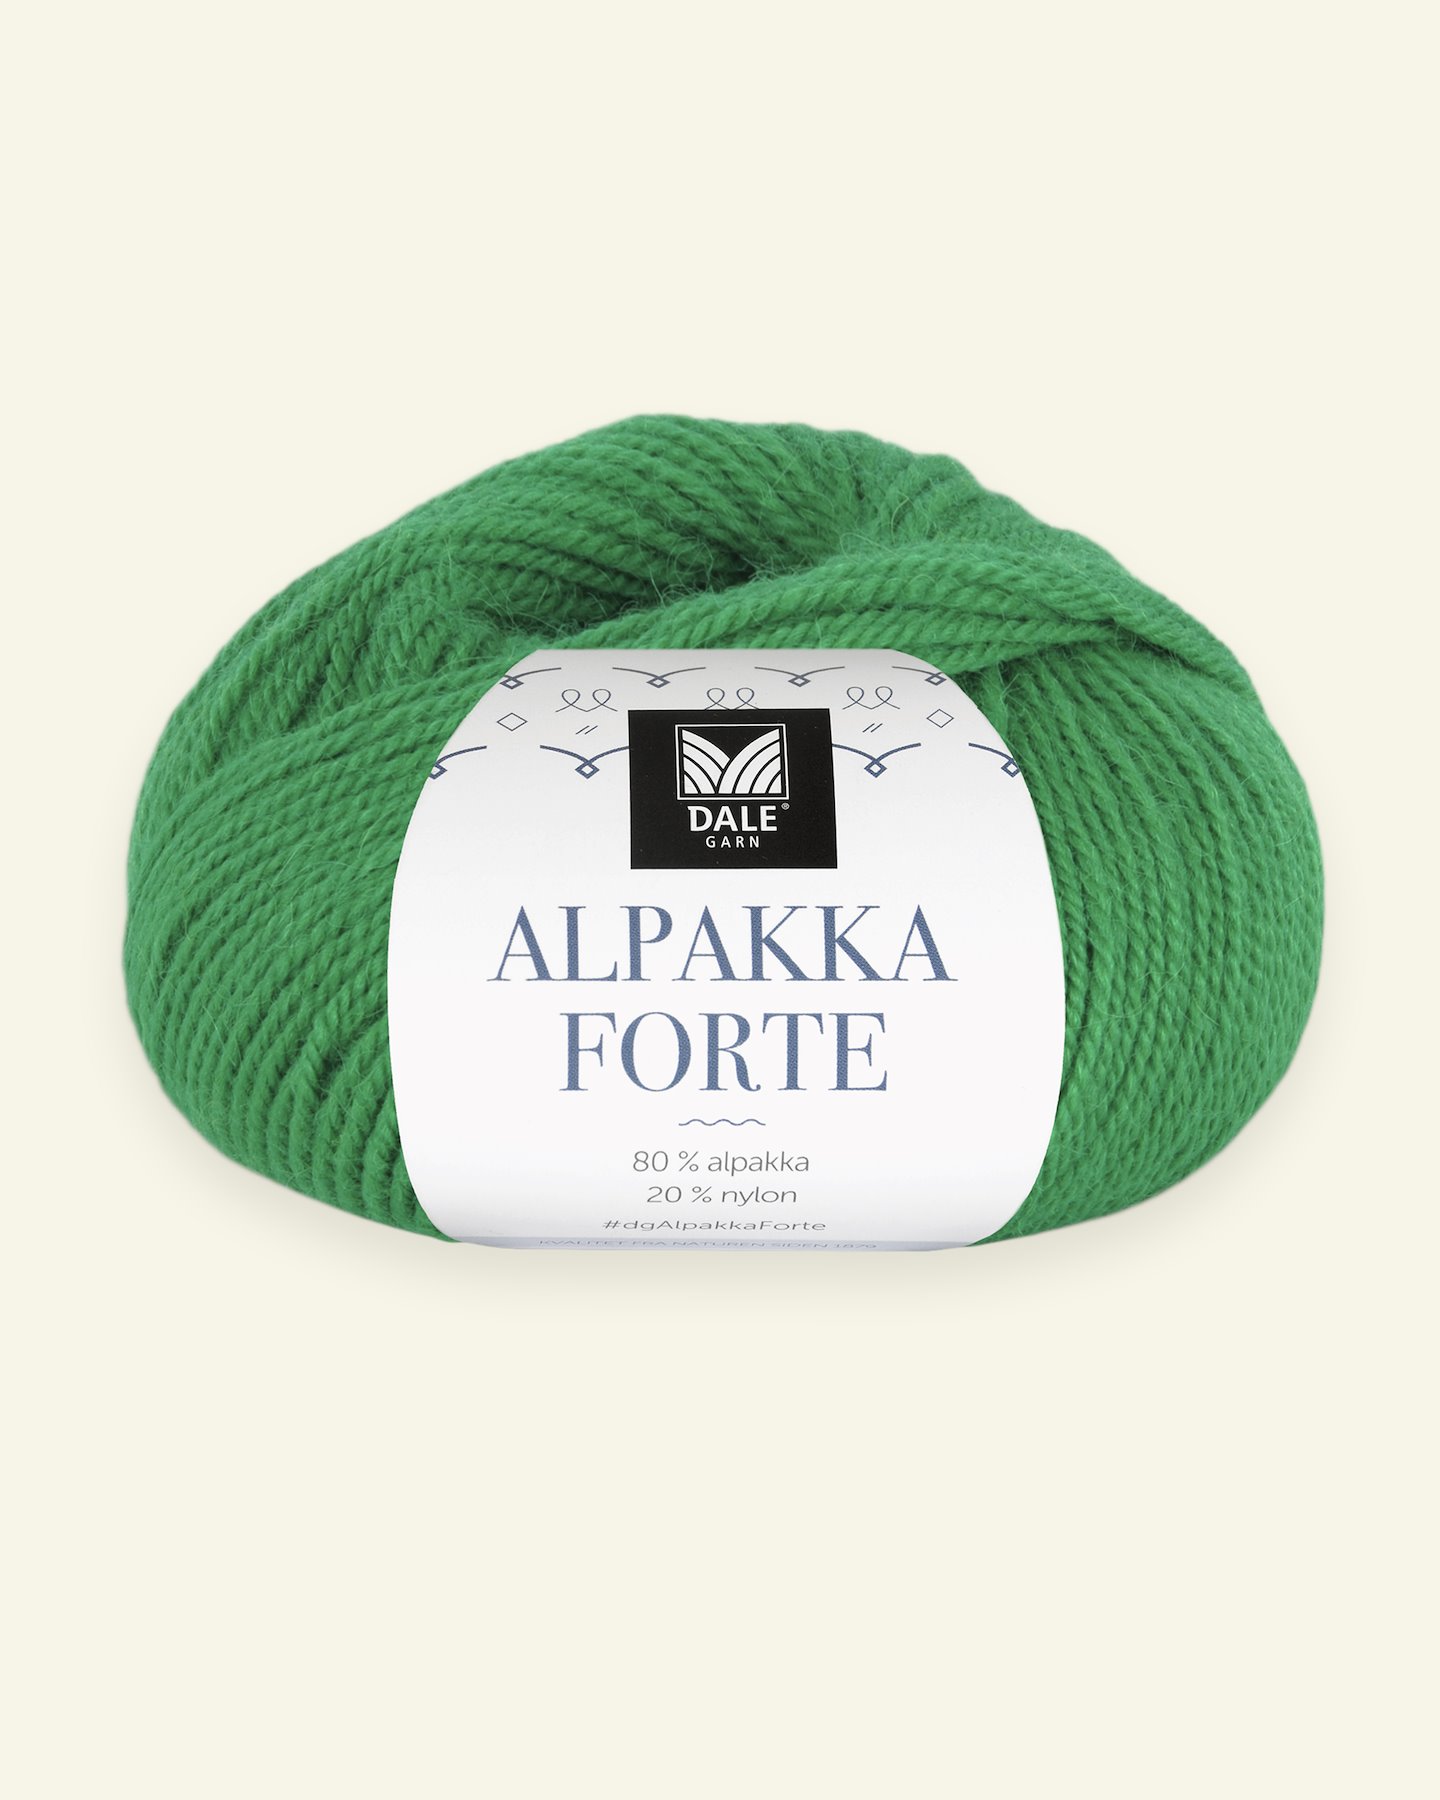 Dale Garn, alpacagarn "Alpakka Forte", grøn (738) 90000461_pack